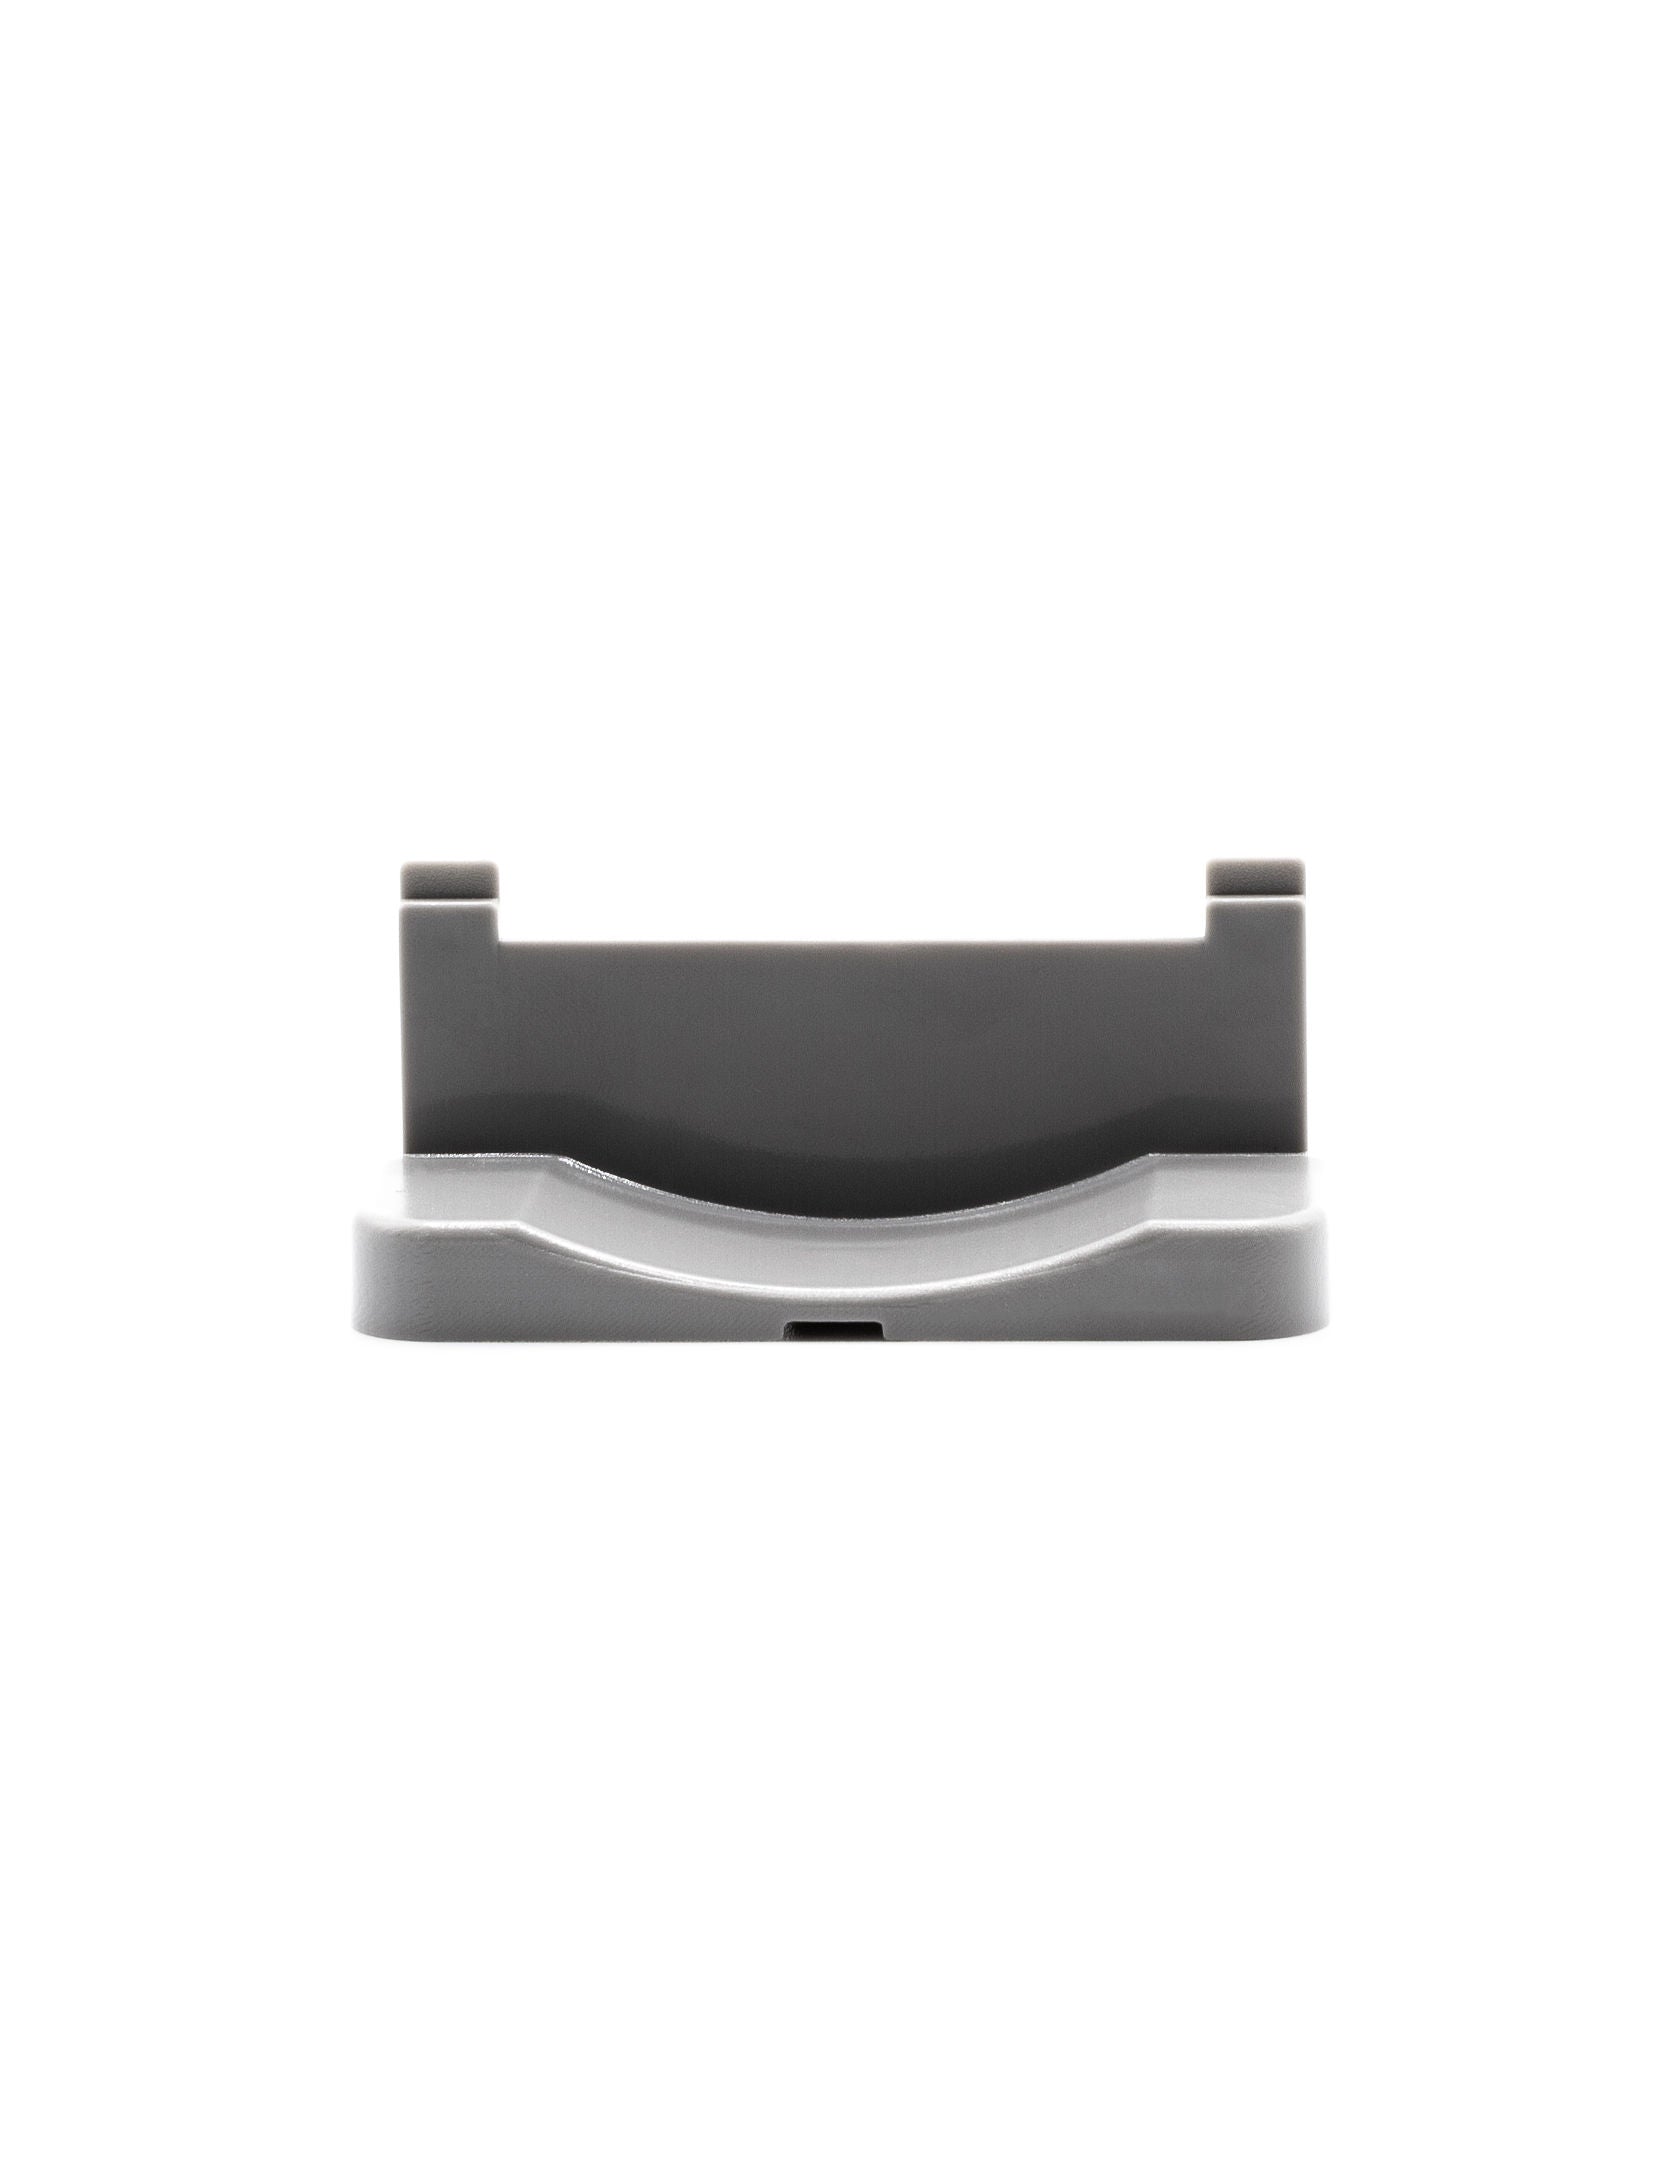 Coulisse Roller blind screw cap plastic - grey (RC3008-GR)